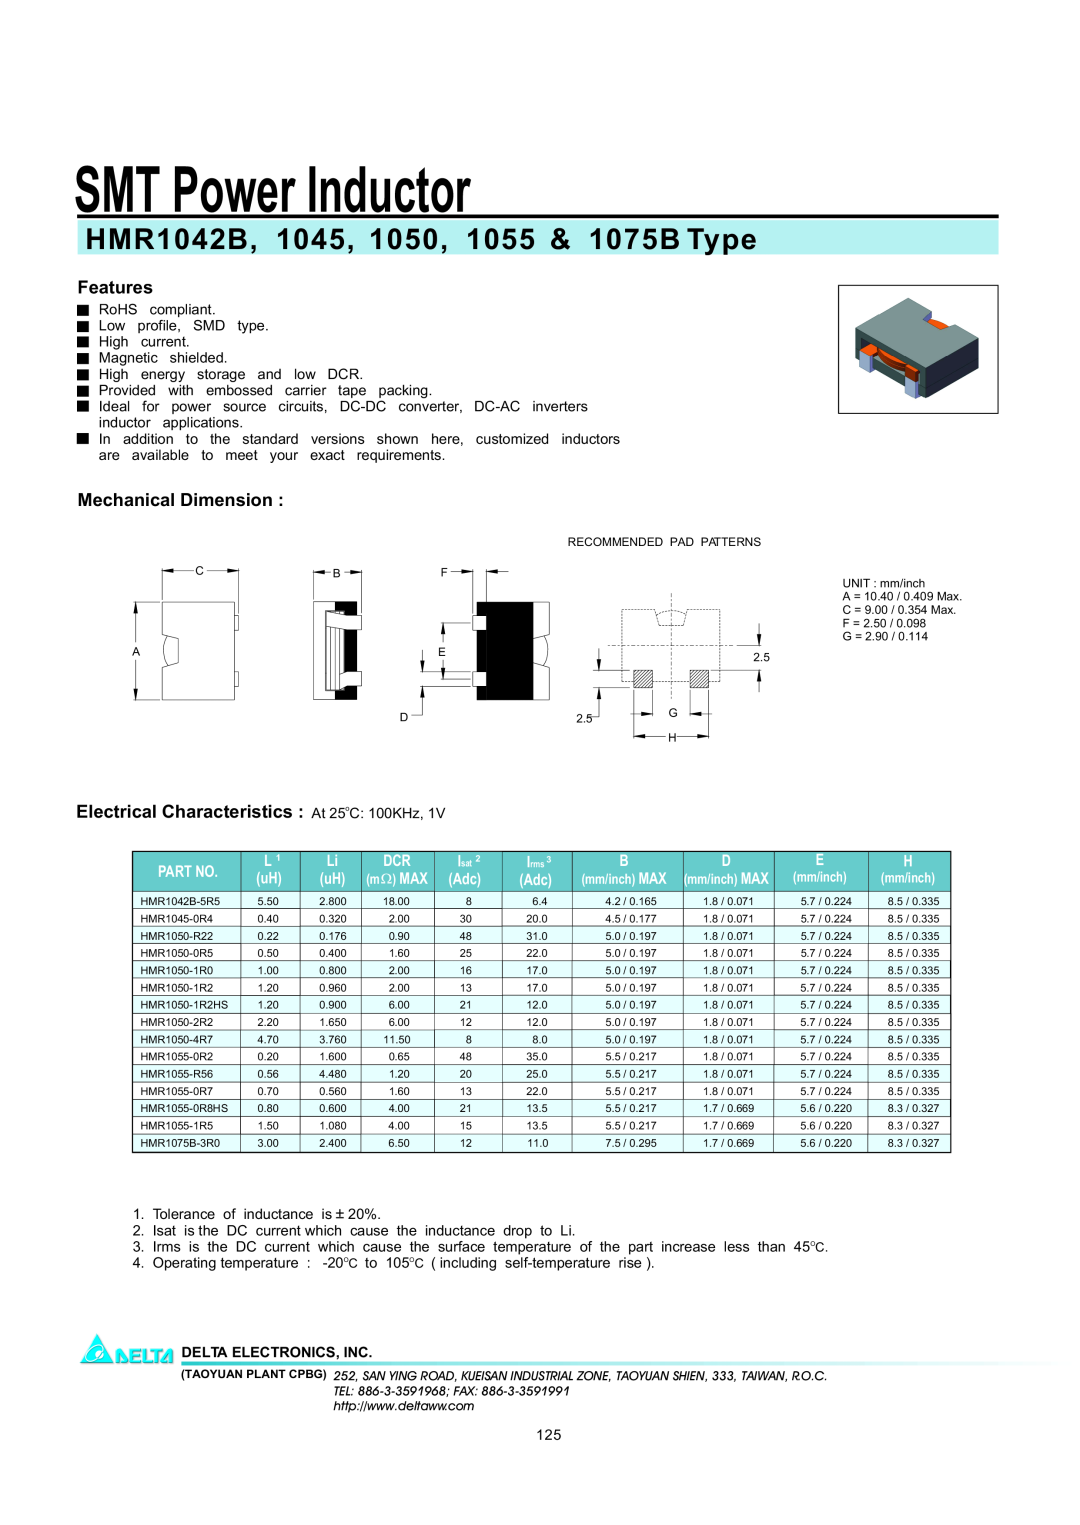 Delta Electronics HMR1055, HMR1075B manual SMT Power Inductor, HMR1042B, 1045, 1050, 1055 & 1075B Type, Features, L 